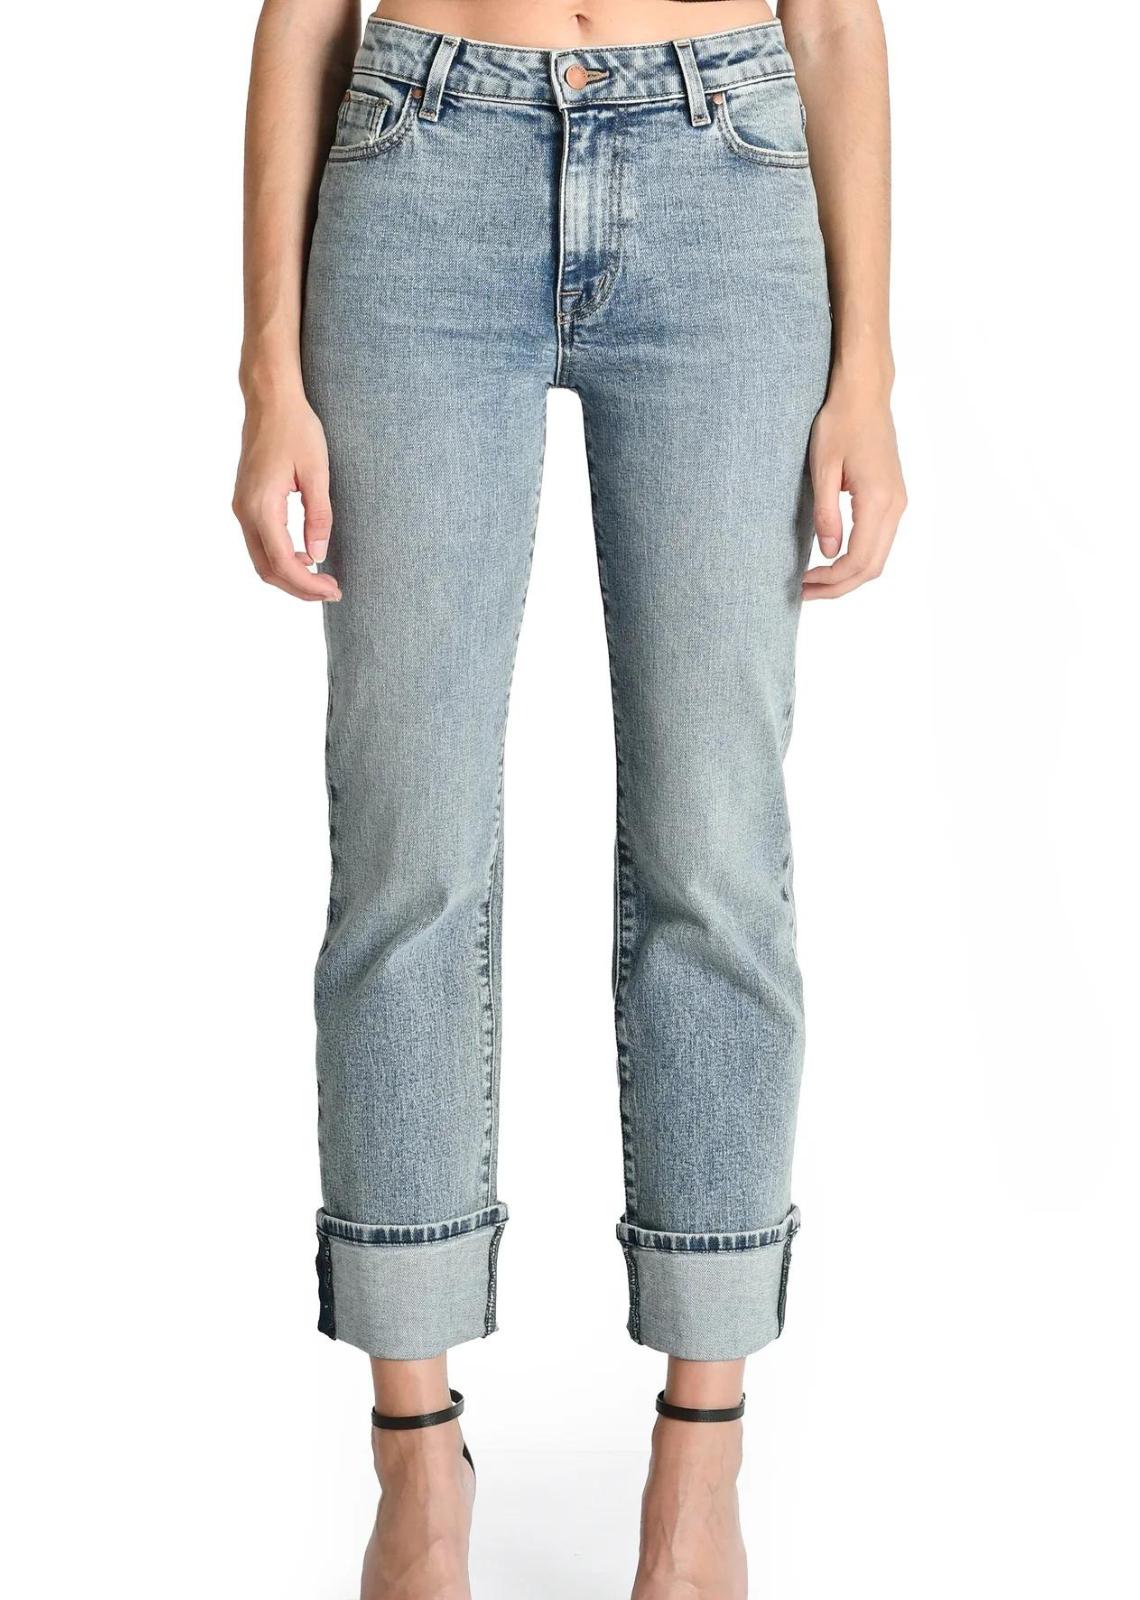 Mr Price - It's a denim kinda day with the @vuke_twins 😍 🔍Mom jeans:  1197316269 - R259.99 🔍Denim bermuda shorts: 1101016573 - R179.99 Visit  mrprice.com to shop hot take 2 denim offers now. #mrprice #mrpricefashion  #mrpmystyle